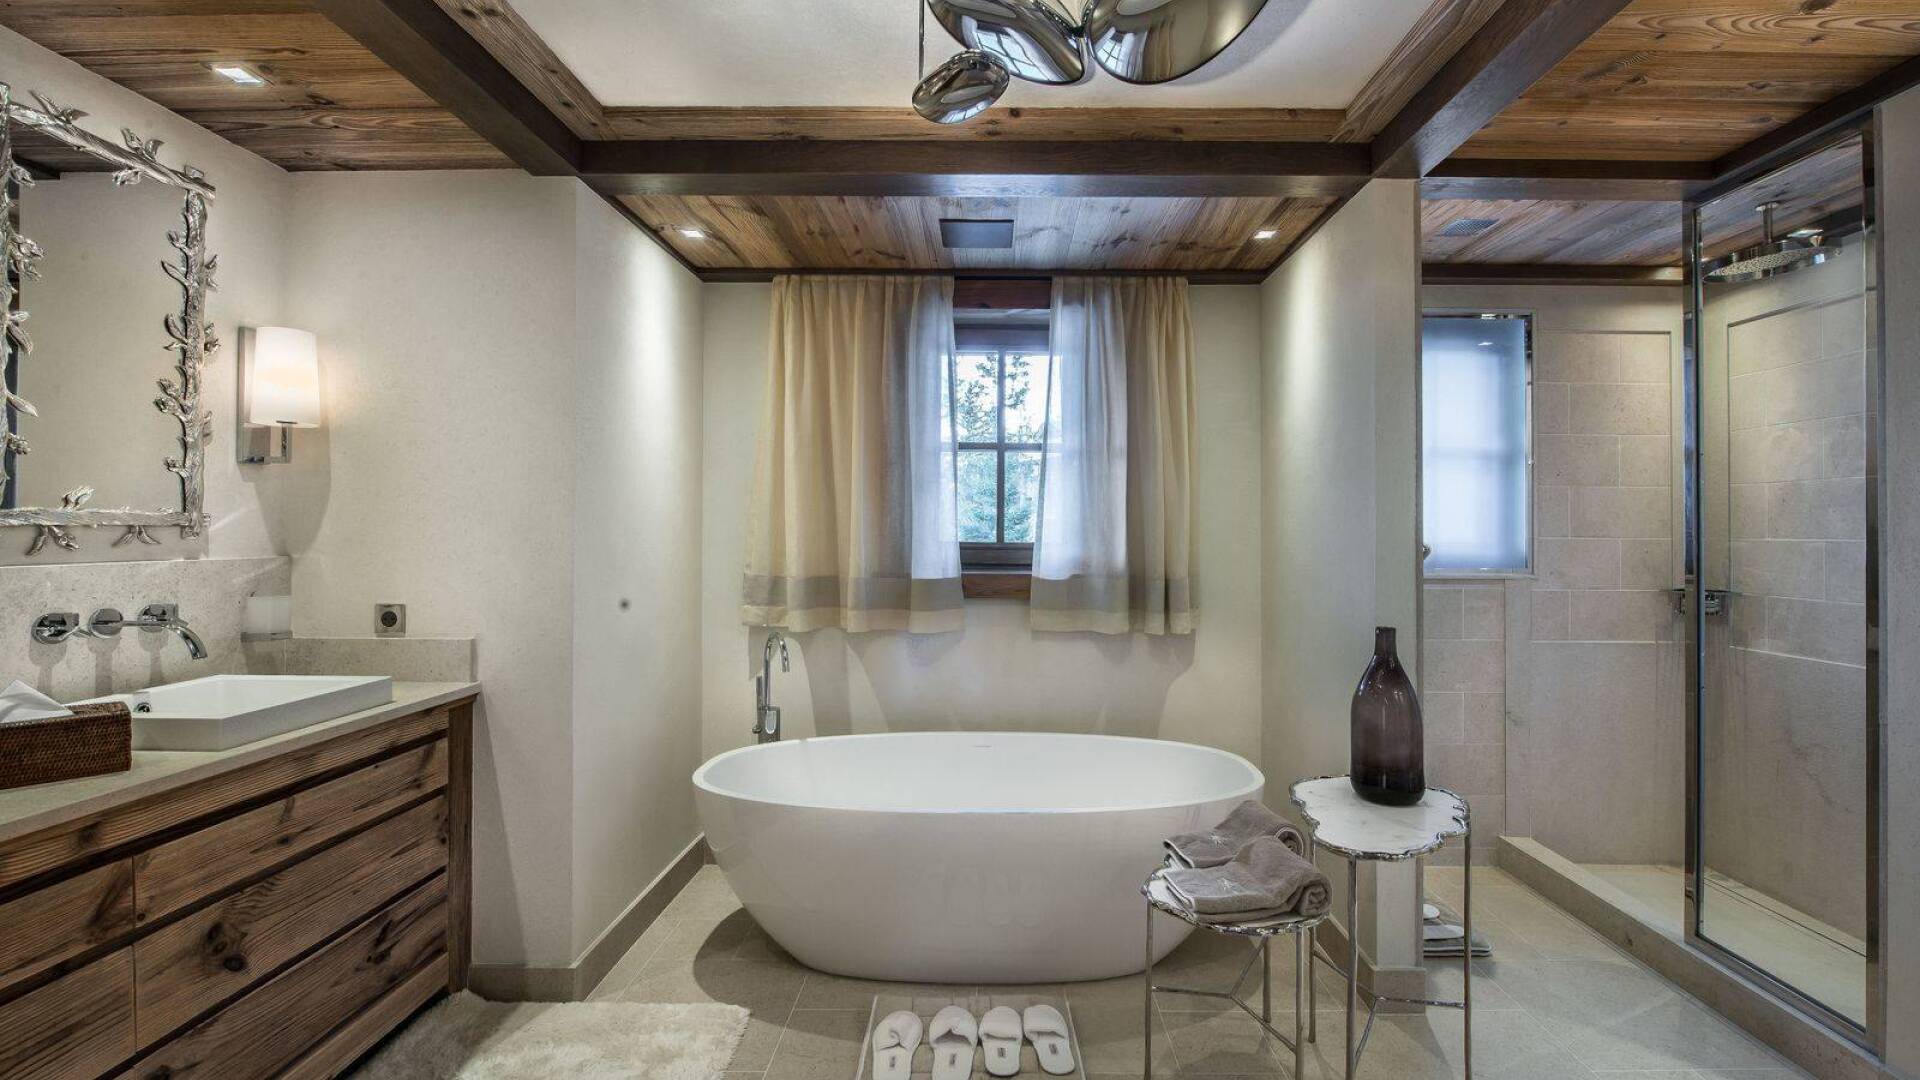 en suite bathroom with bath tub and walk-in shower